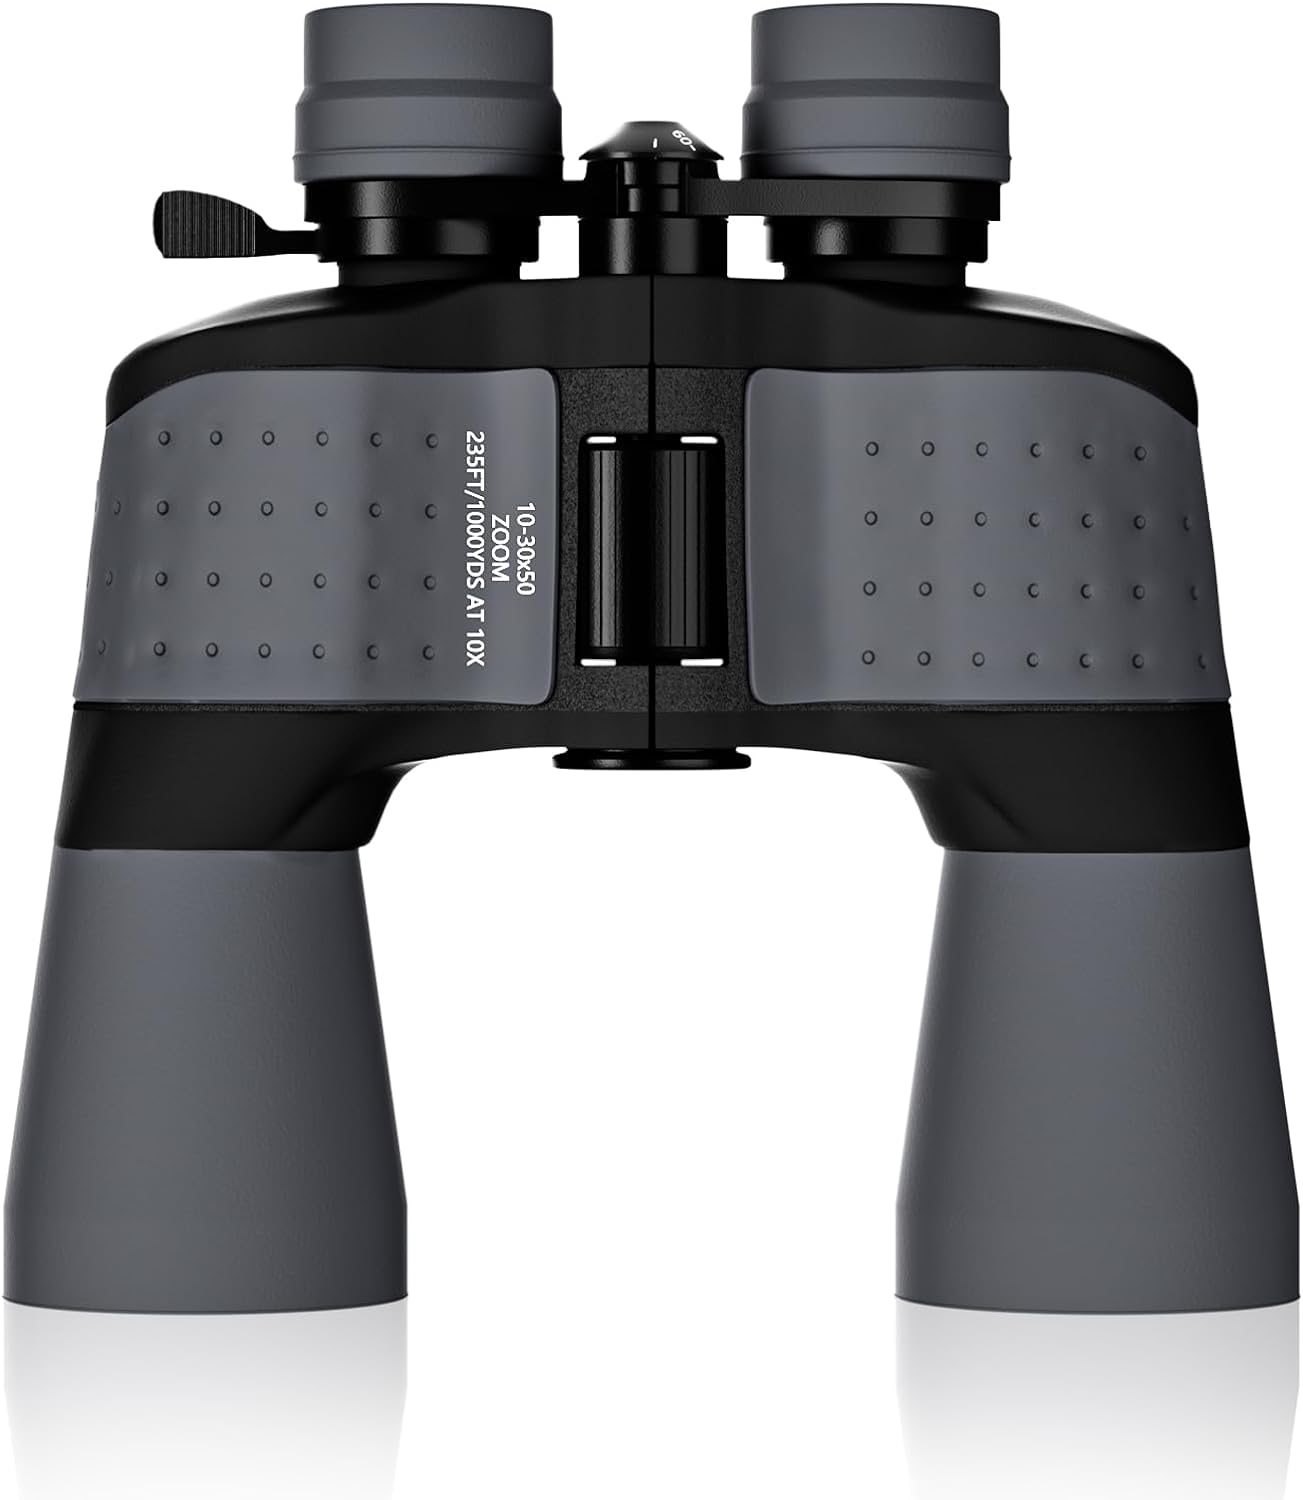 𝟏𝟎-𝟑𝟎𝐱𝟓𝟎 Zoom Binoculars for Adults, High Powered HD Professional Binoculars, FMC Lens and HK9 Prism, Clear Low Light Vision, Easy Focus, Waterproof Binoculars for Bird Watching Hunting